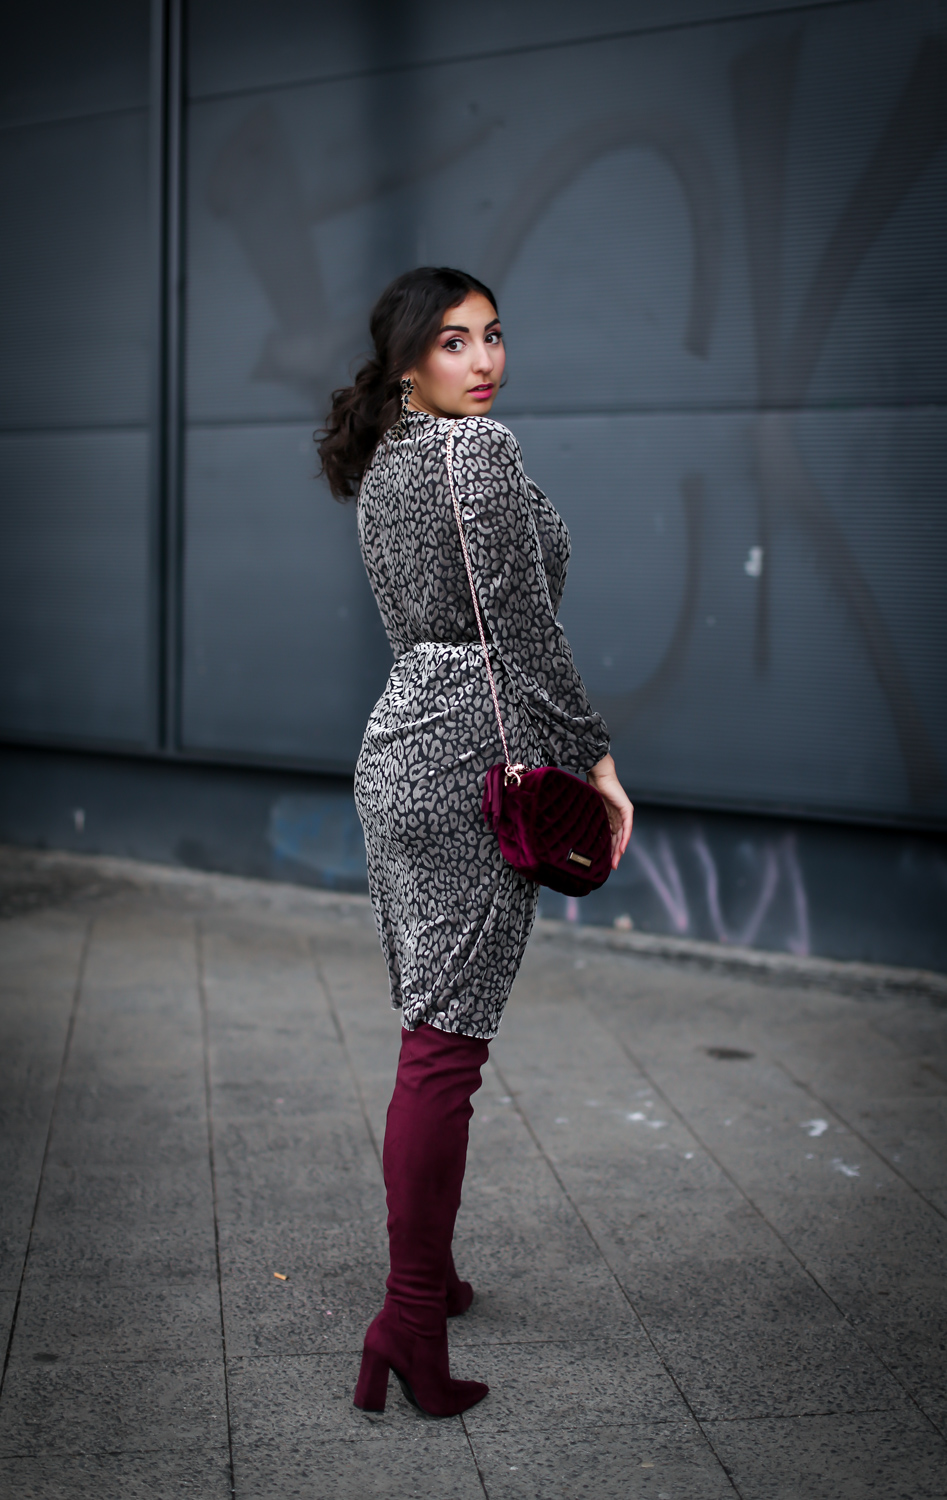 christmas look festive style 2018 velvet wrap dress leoprint loavies overknees outfit winter look streetstyle fashion modeblog berlin blog samieze